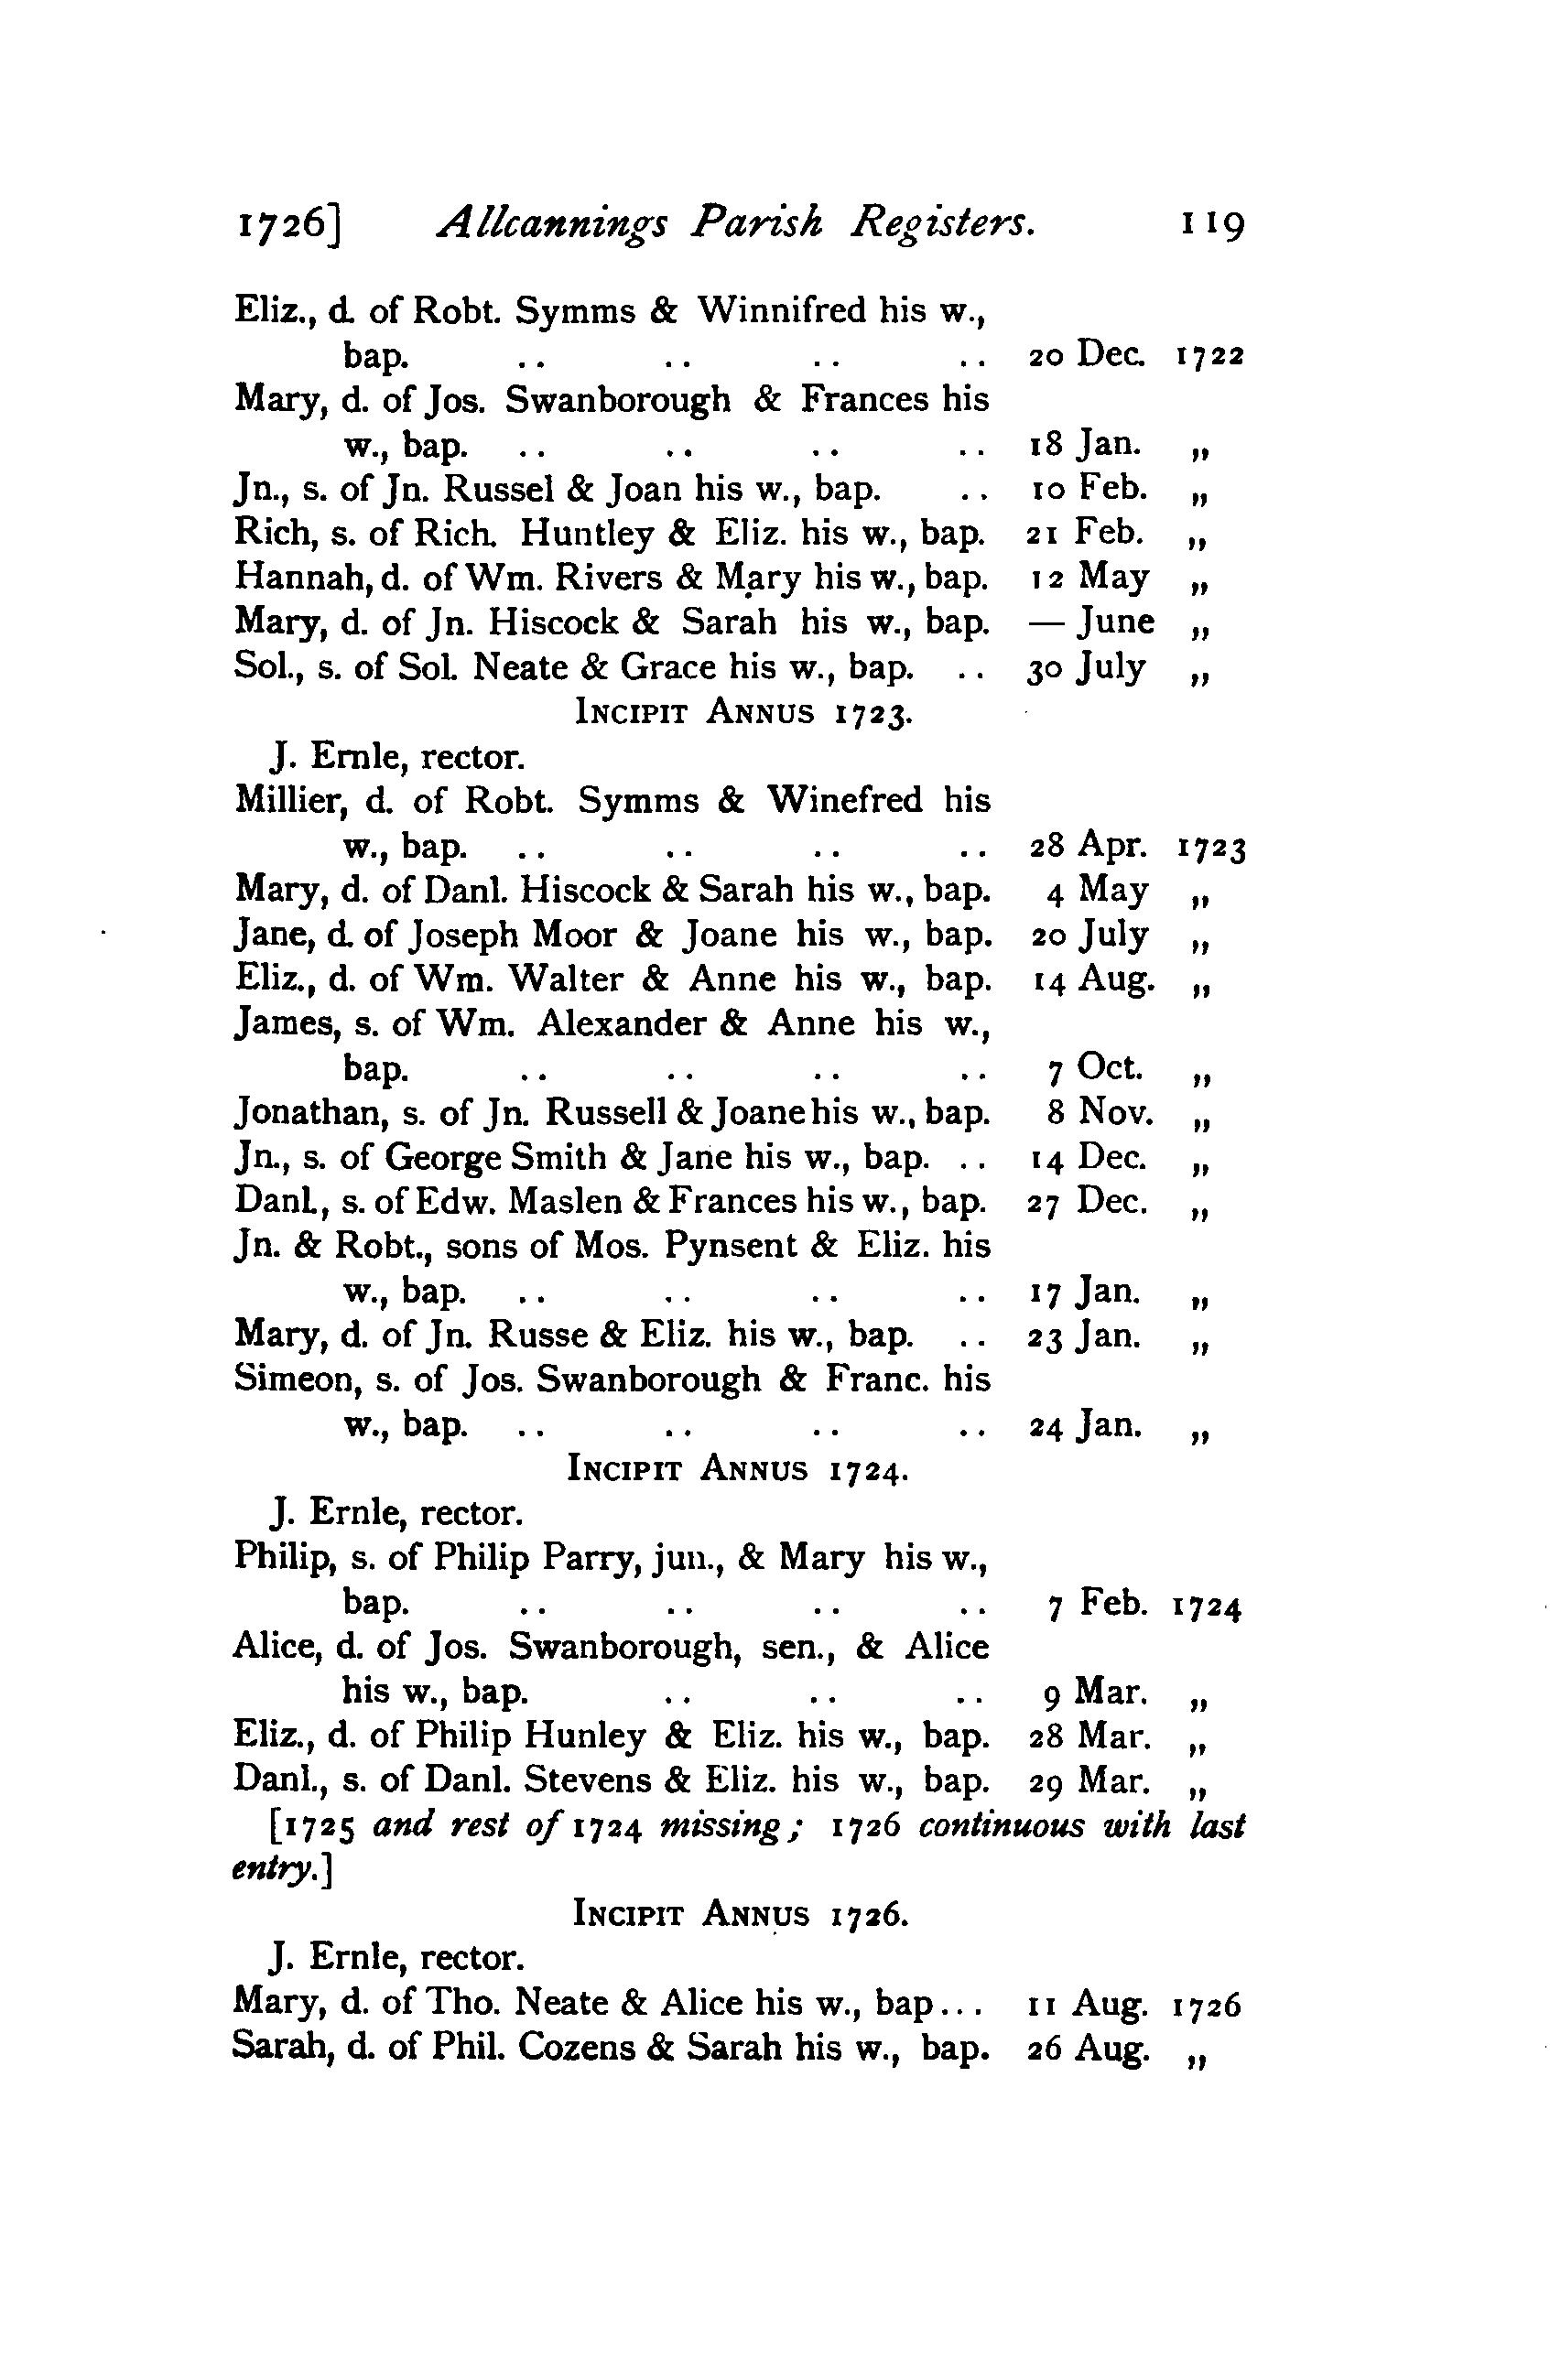 1905 transcript showing baptism of Alice Swanborough in 1724